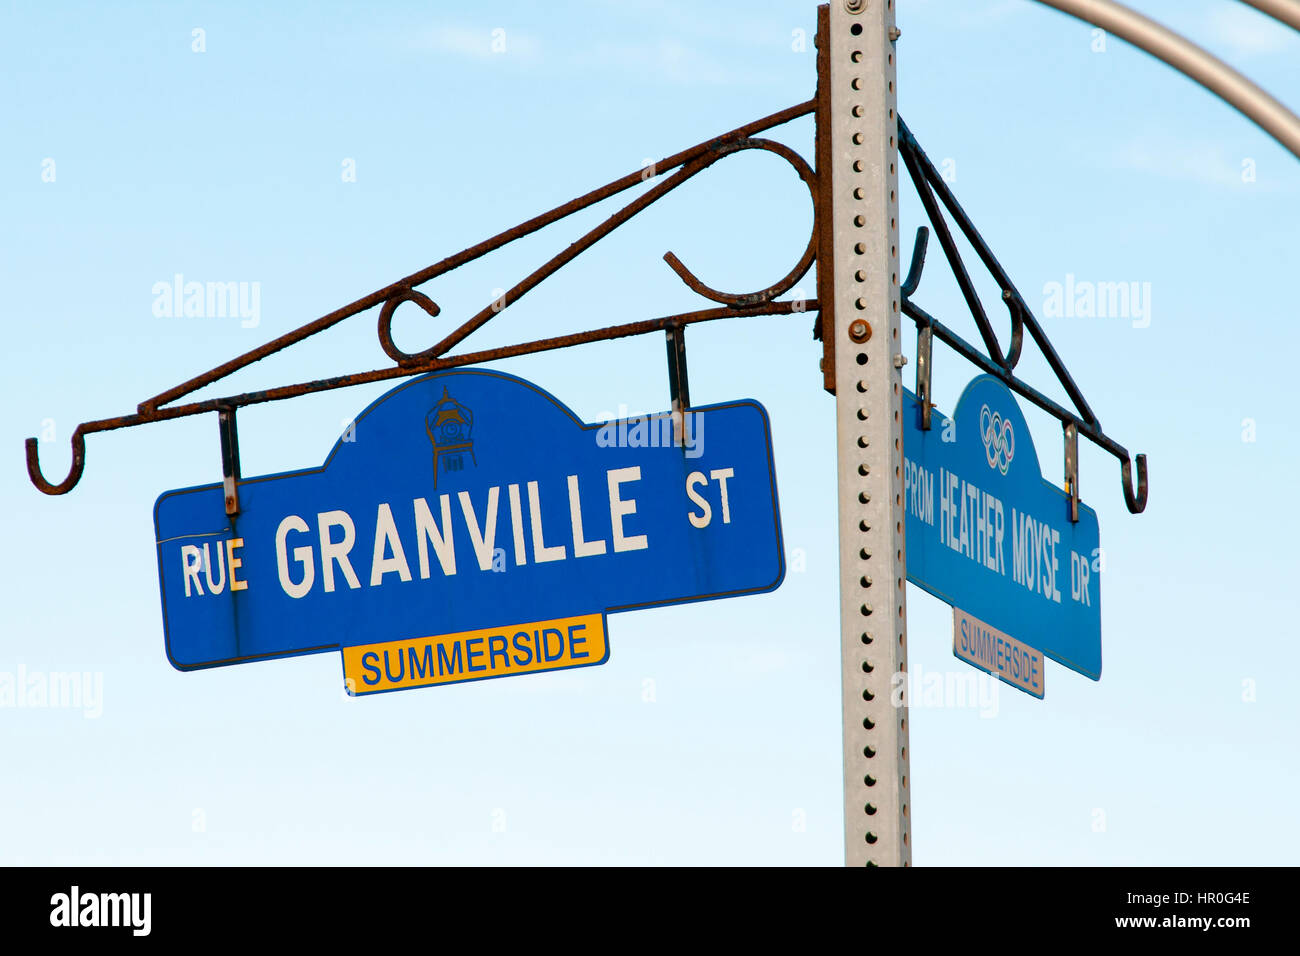 La rue Granville à Summerside - Prince Edward Island - Canada Banque D'Images